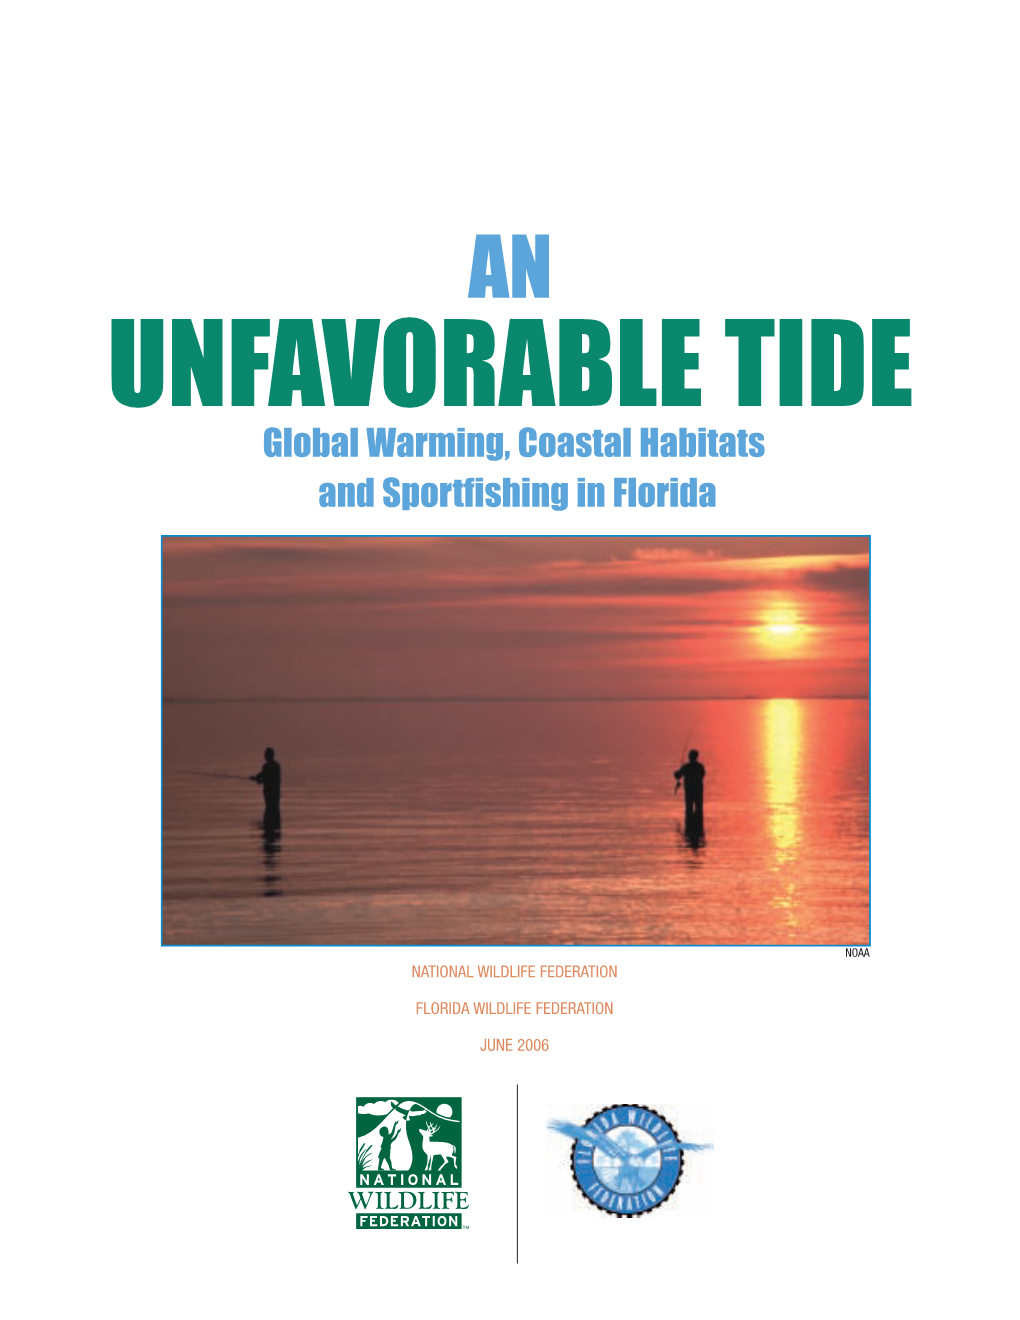 UNFAVORABLE TIDE Global Warming, Coastal Habitats and Sportfishing in Florida